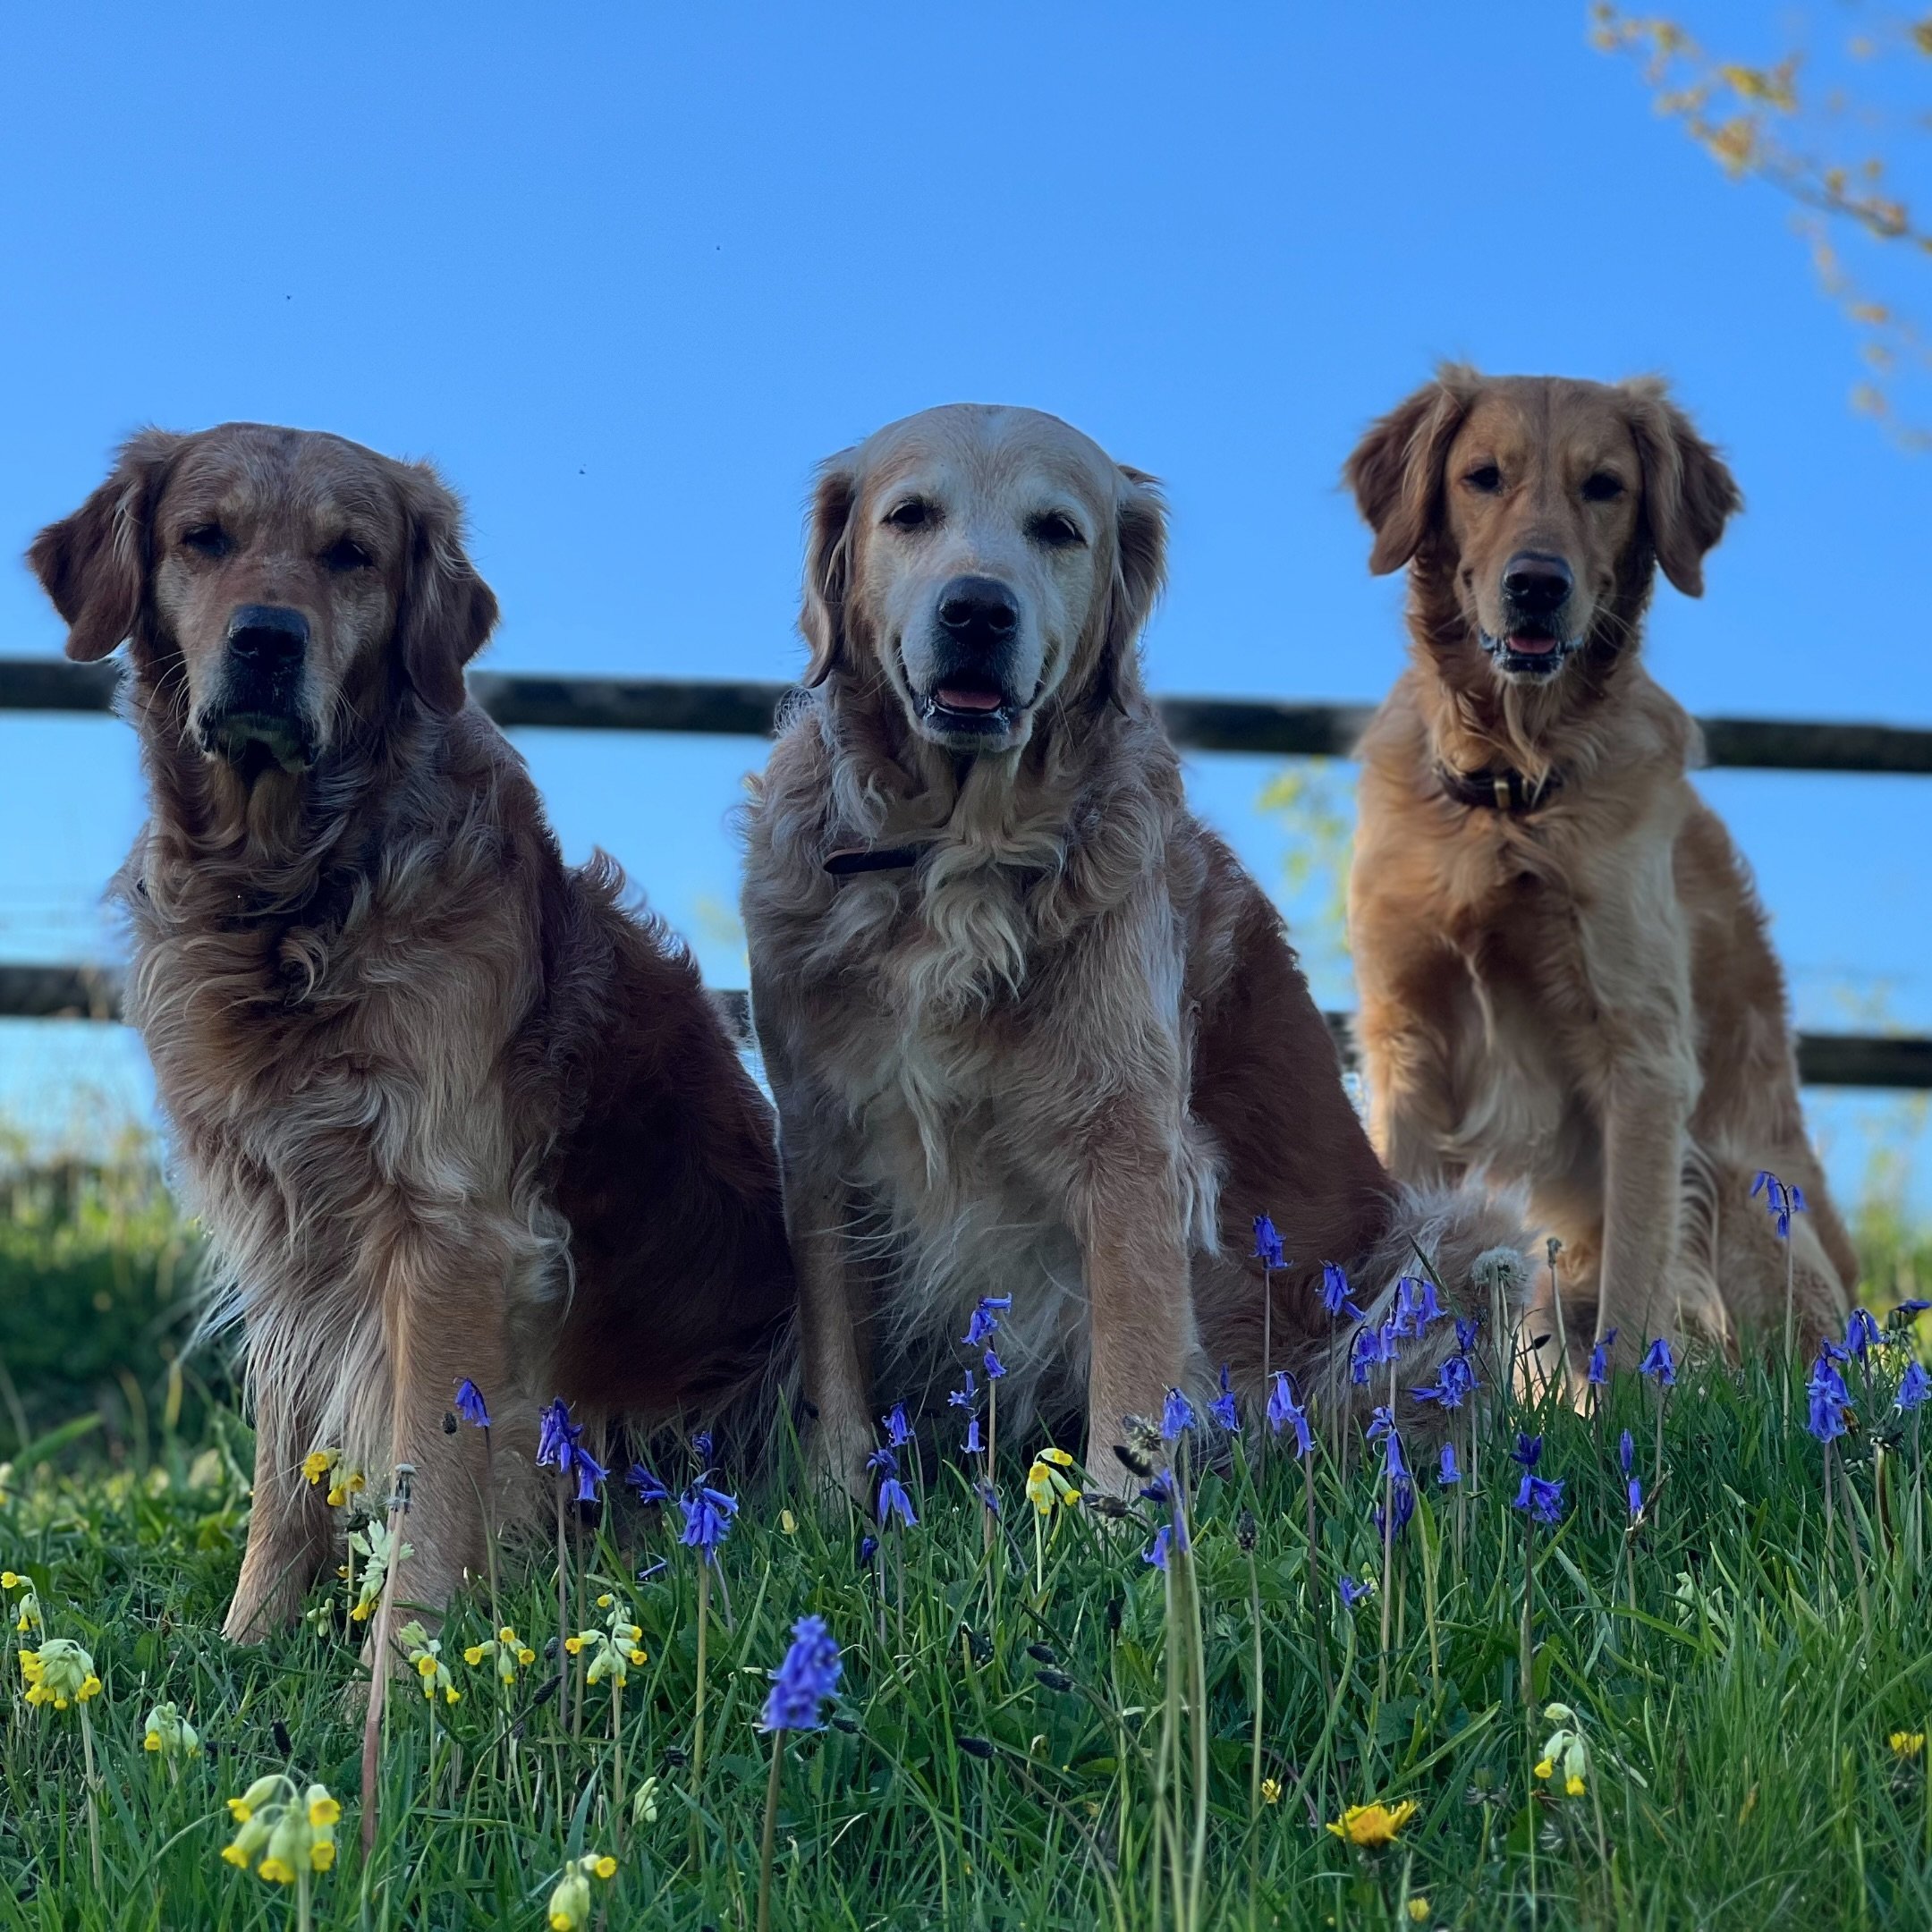 Time for the seasonal bluebell image - share yours in comments #goldenretriever #bluebellseason #retrievers #gundog #springflowers #dogslife #dogtraining #townandcountrydogtraining